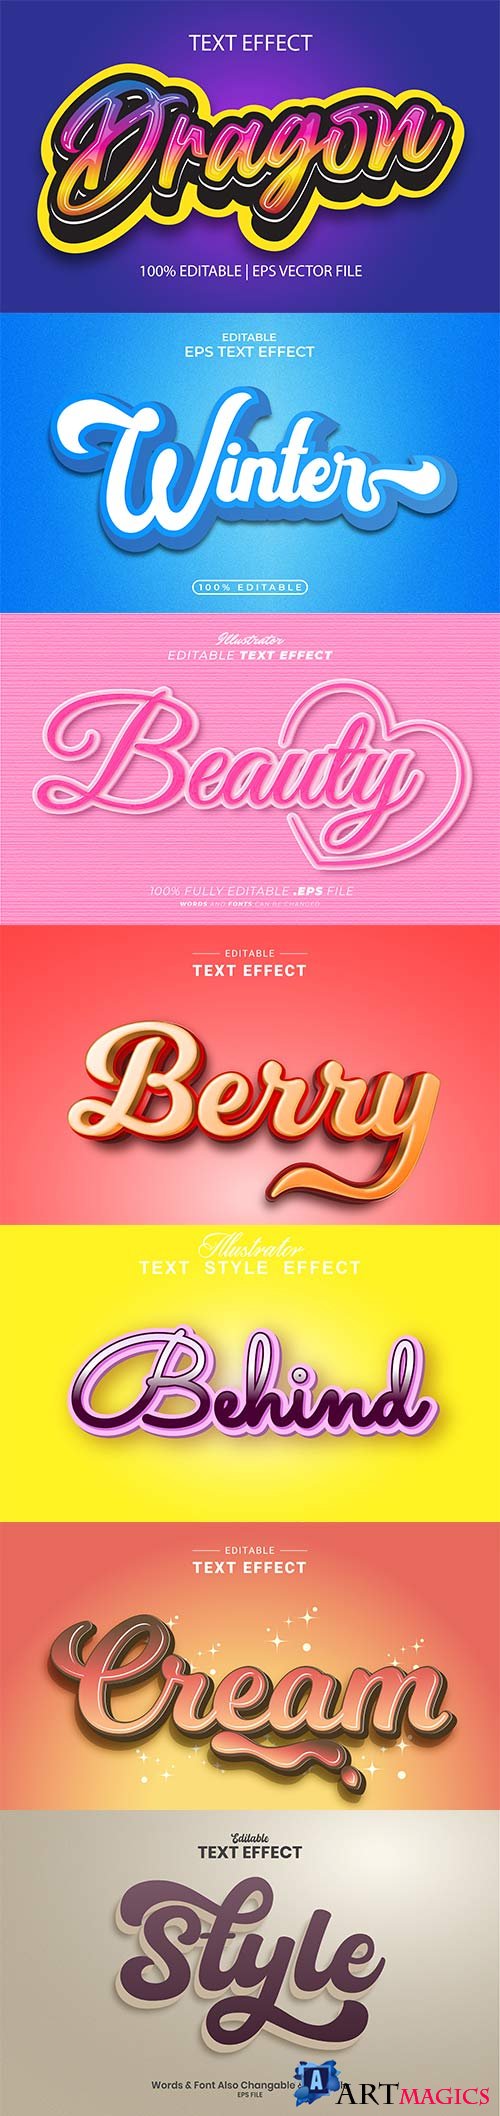 3d editable text style effect vector vol 898